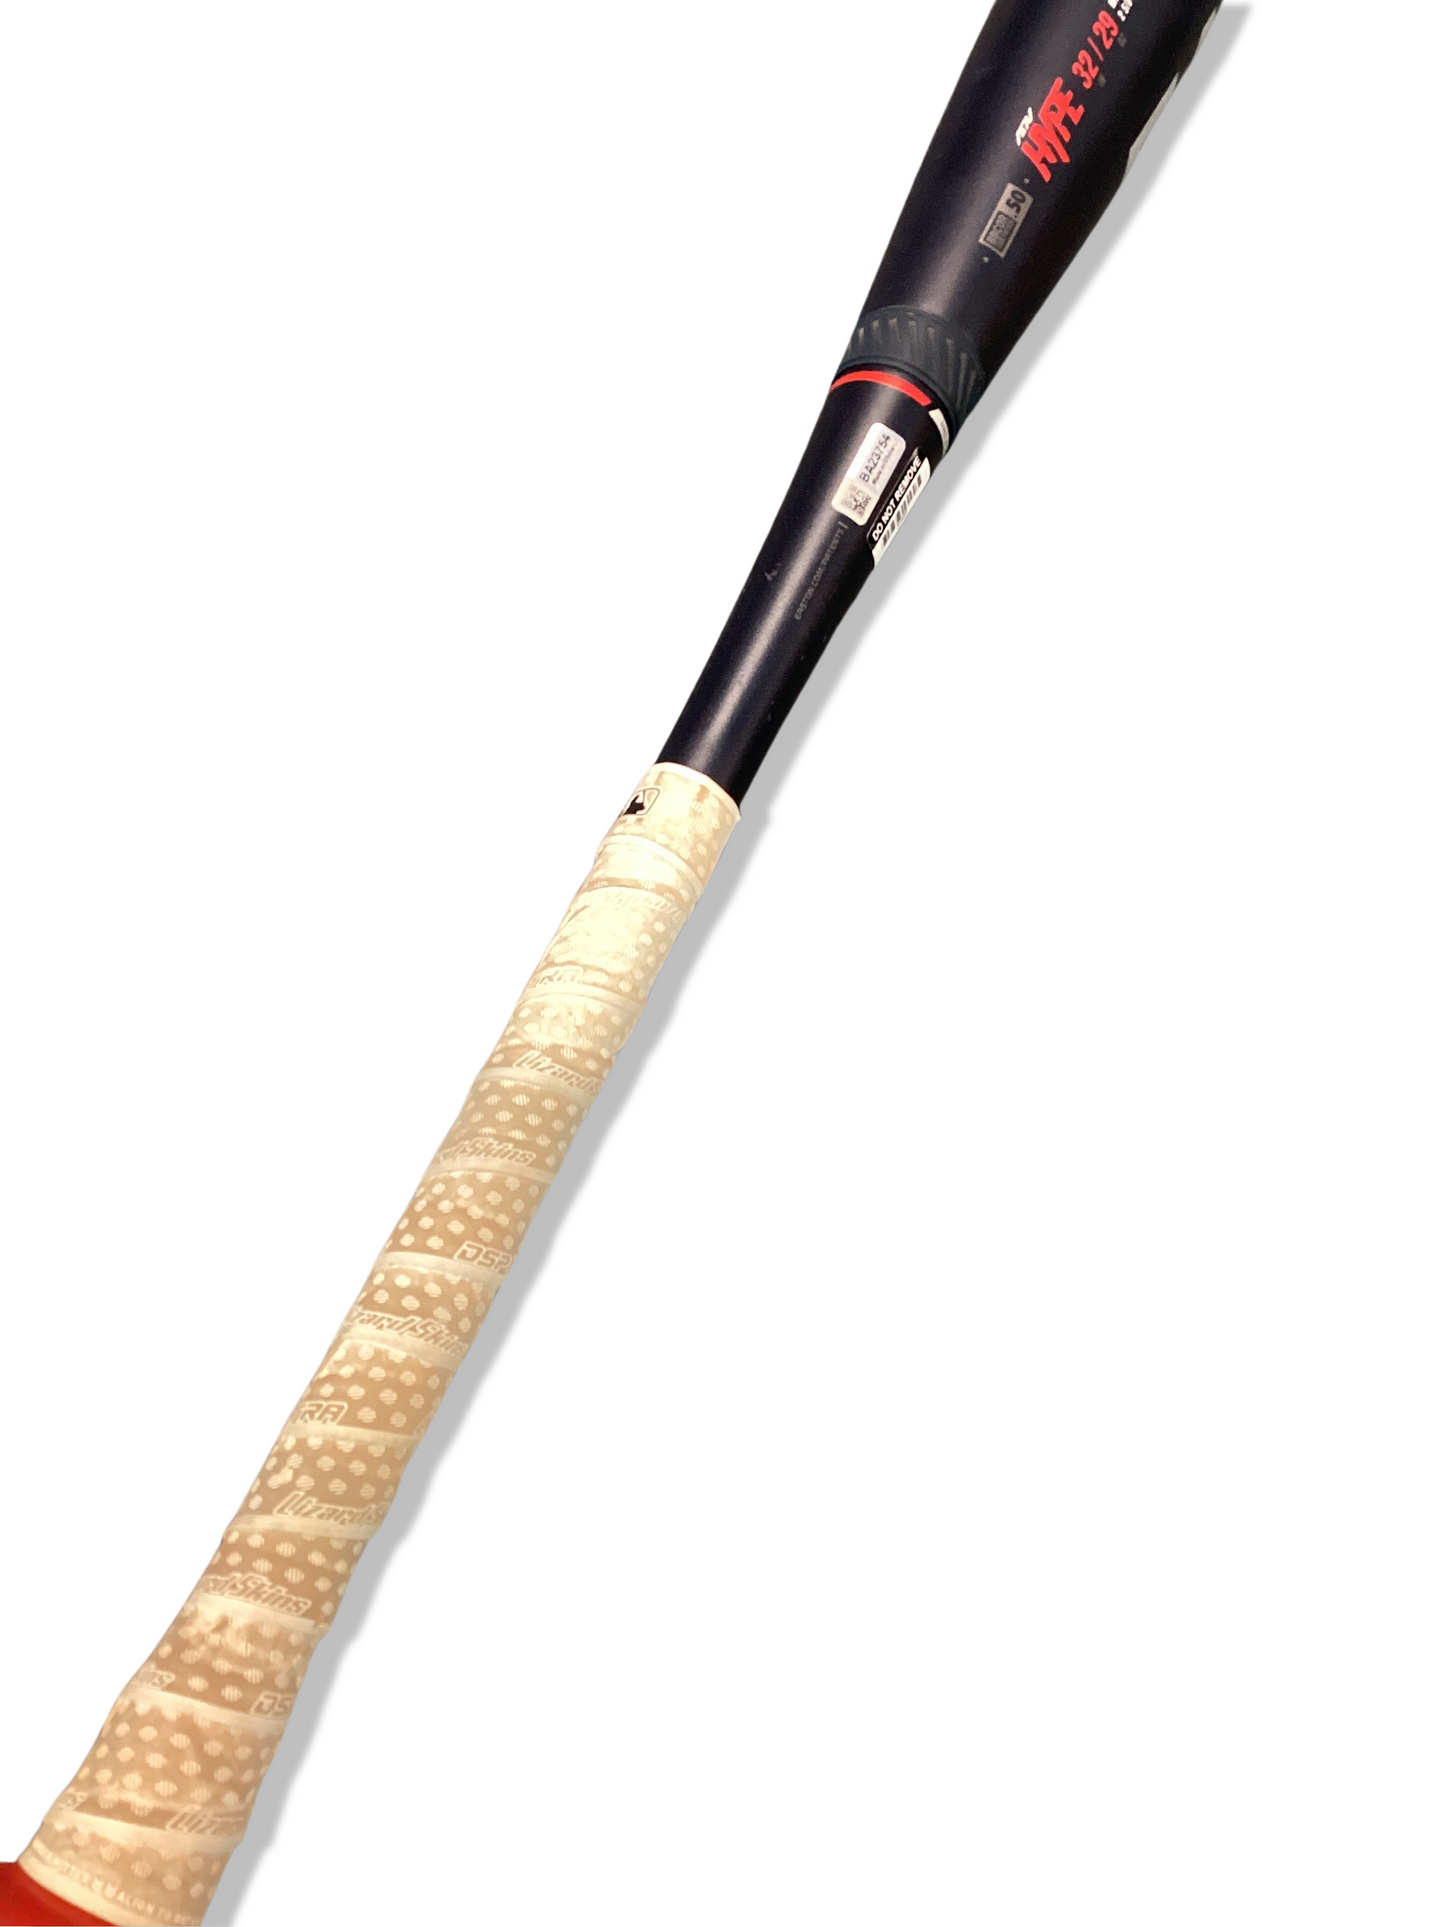 2022 Easton ADV HYPE BBCOR (-3) 32" 29oz Baseball Bat - Used